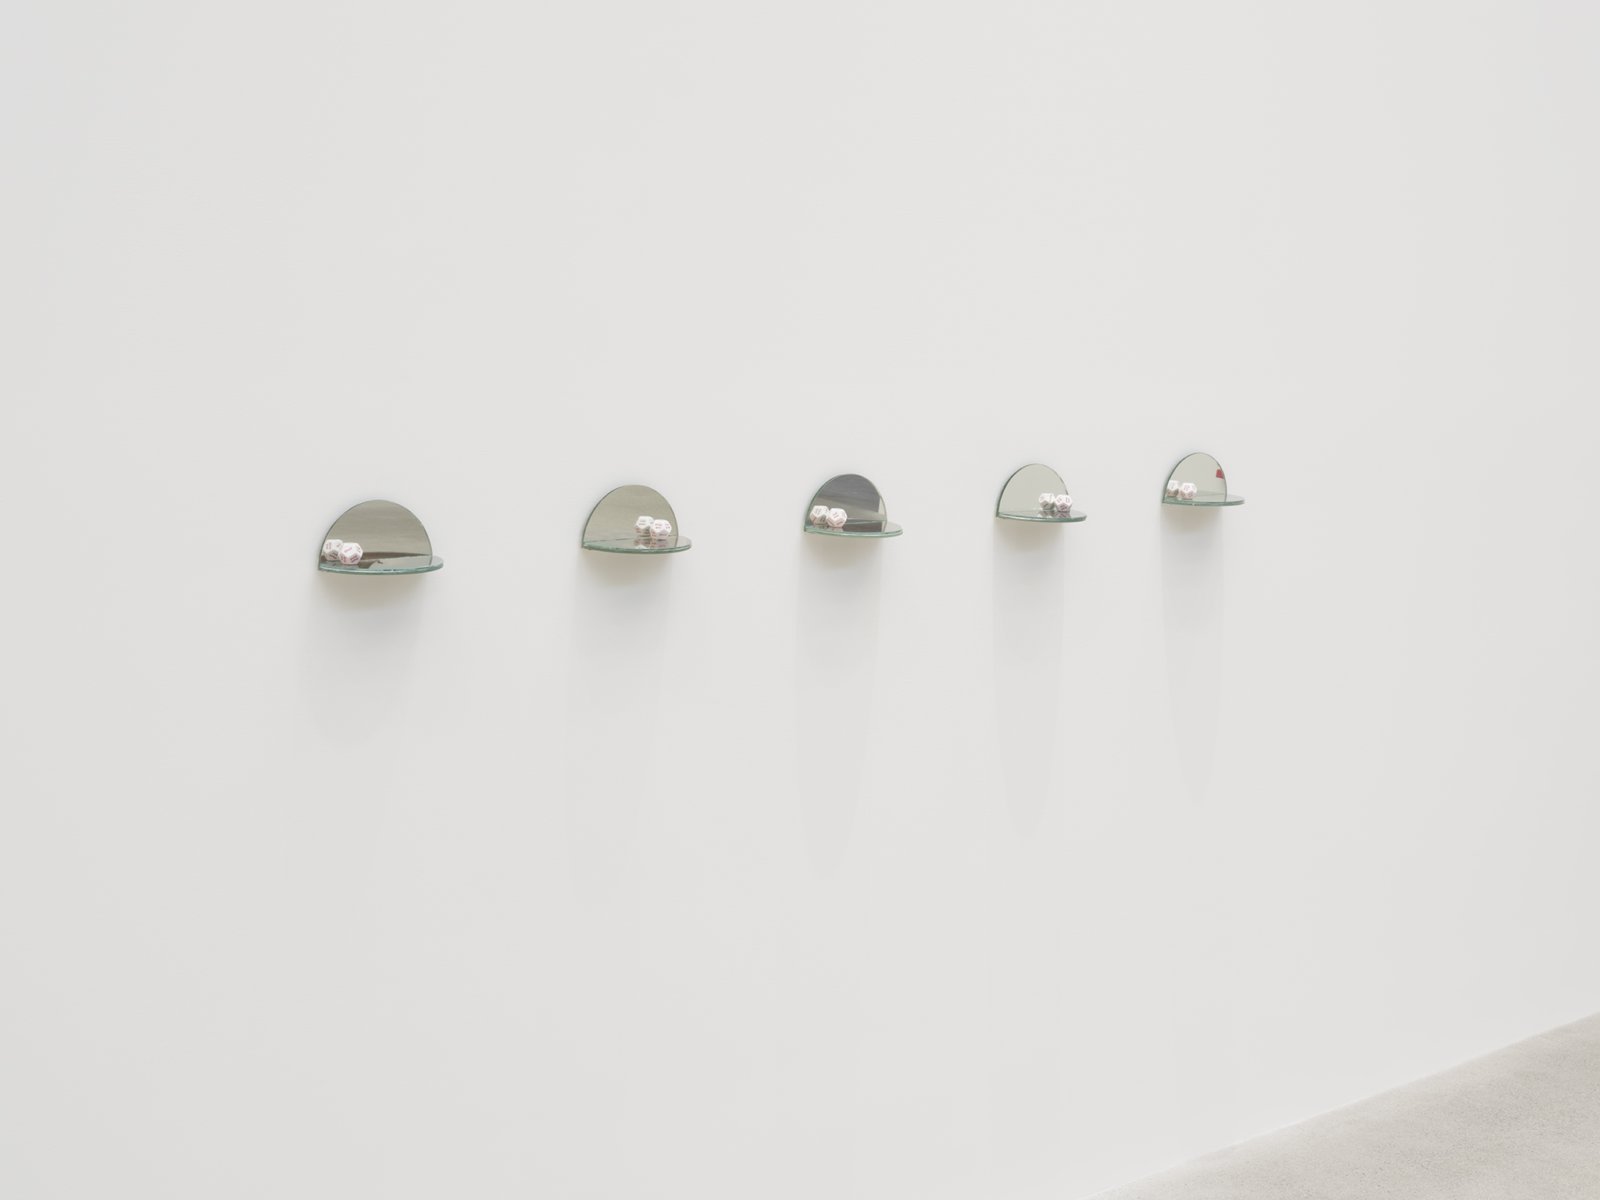 Kasper Feyrer, The Ambidextrous Universe, 2018, mirror, liquid mirror, glass, fujiclear transparency, 12-sided die, each 4 x 4 x 7 in. (9 x 9 x 18 cm)